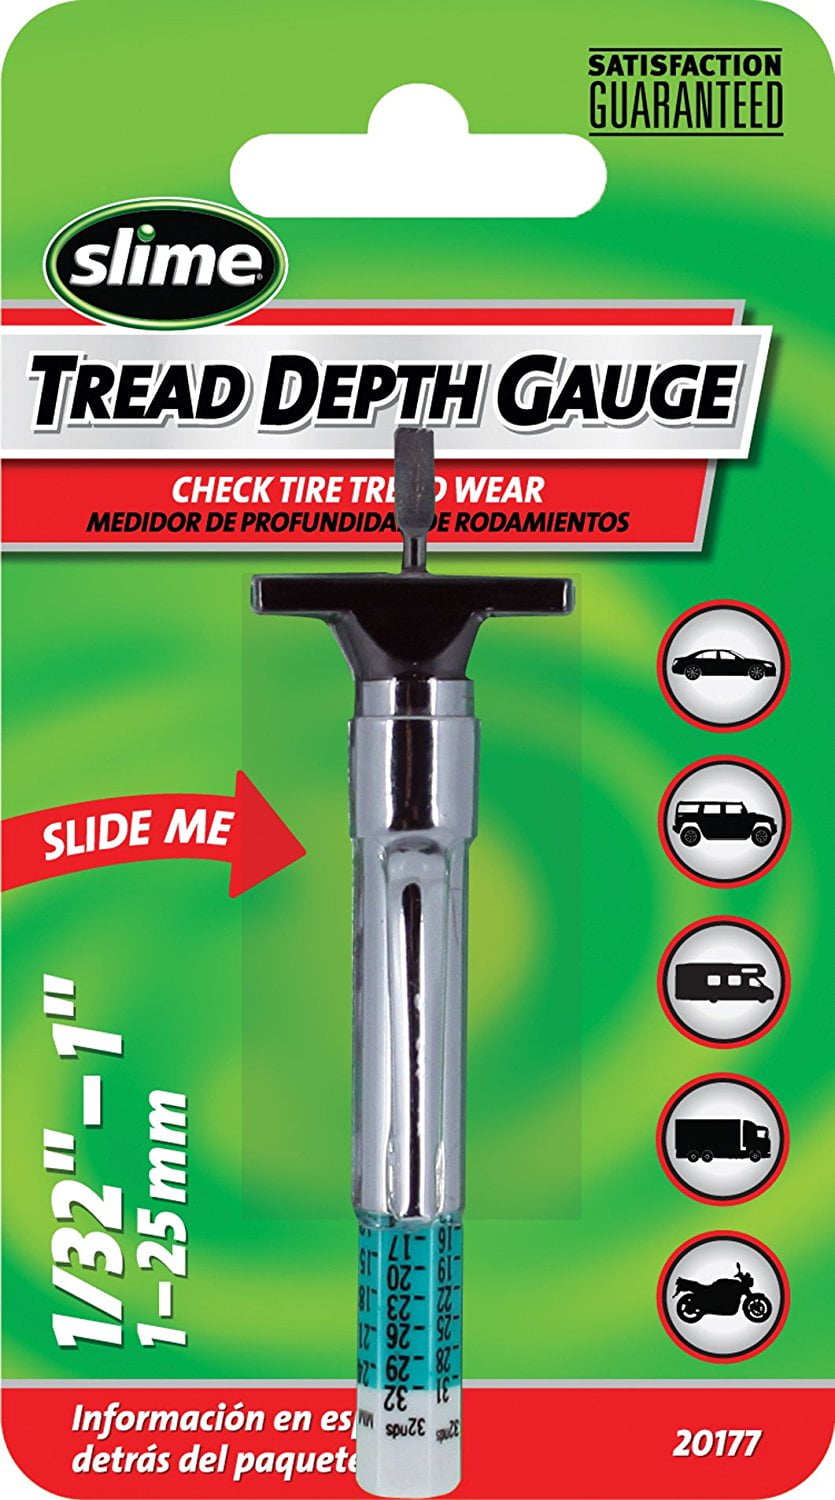 1 Car Truck Tire Tread Depth Gauge tester Standard Gage Metric Measure NEW T1L6 